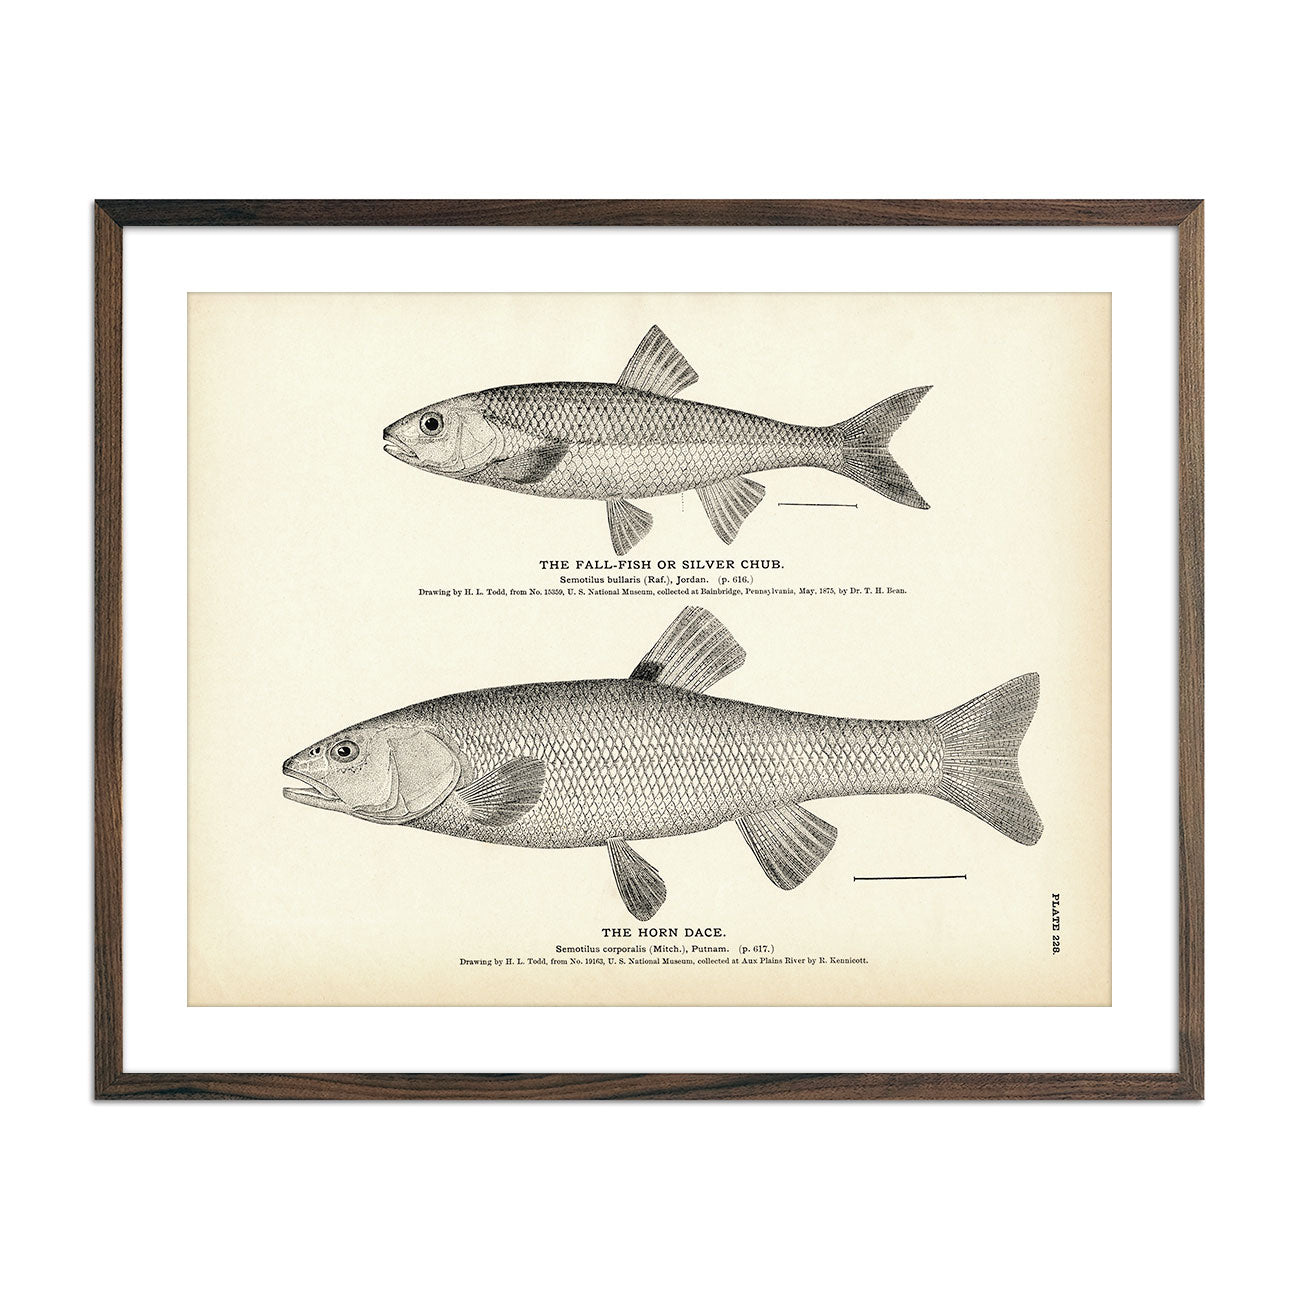 Fall-Fish (Silver Chub) and Horn Dace - 1884 Print